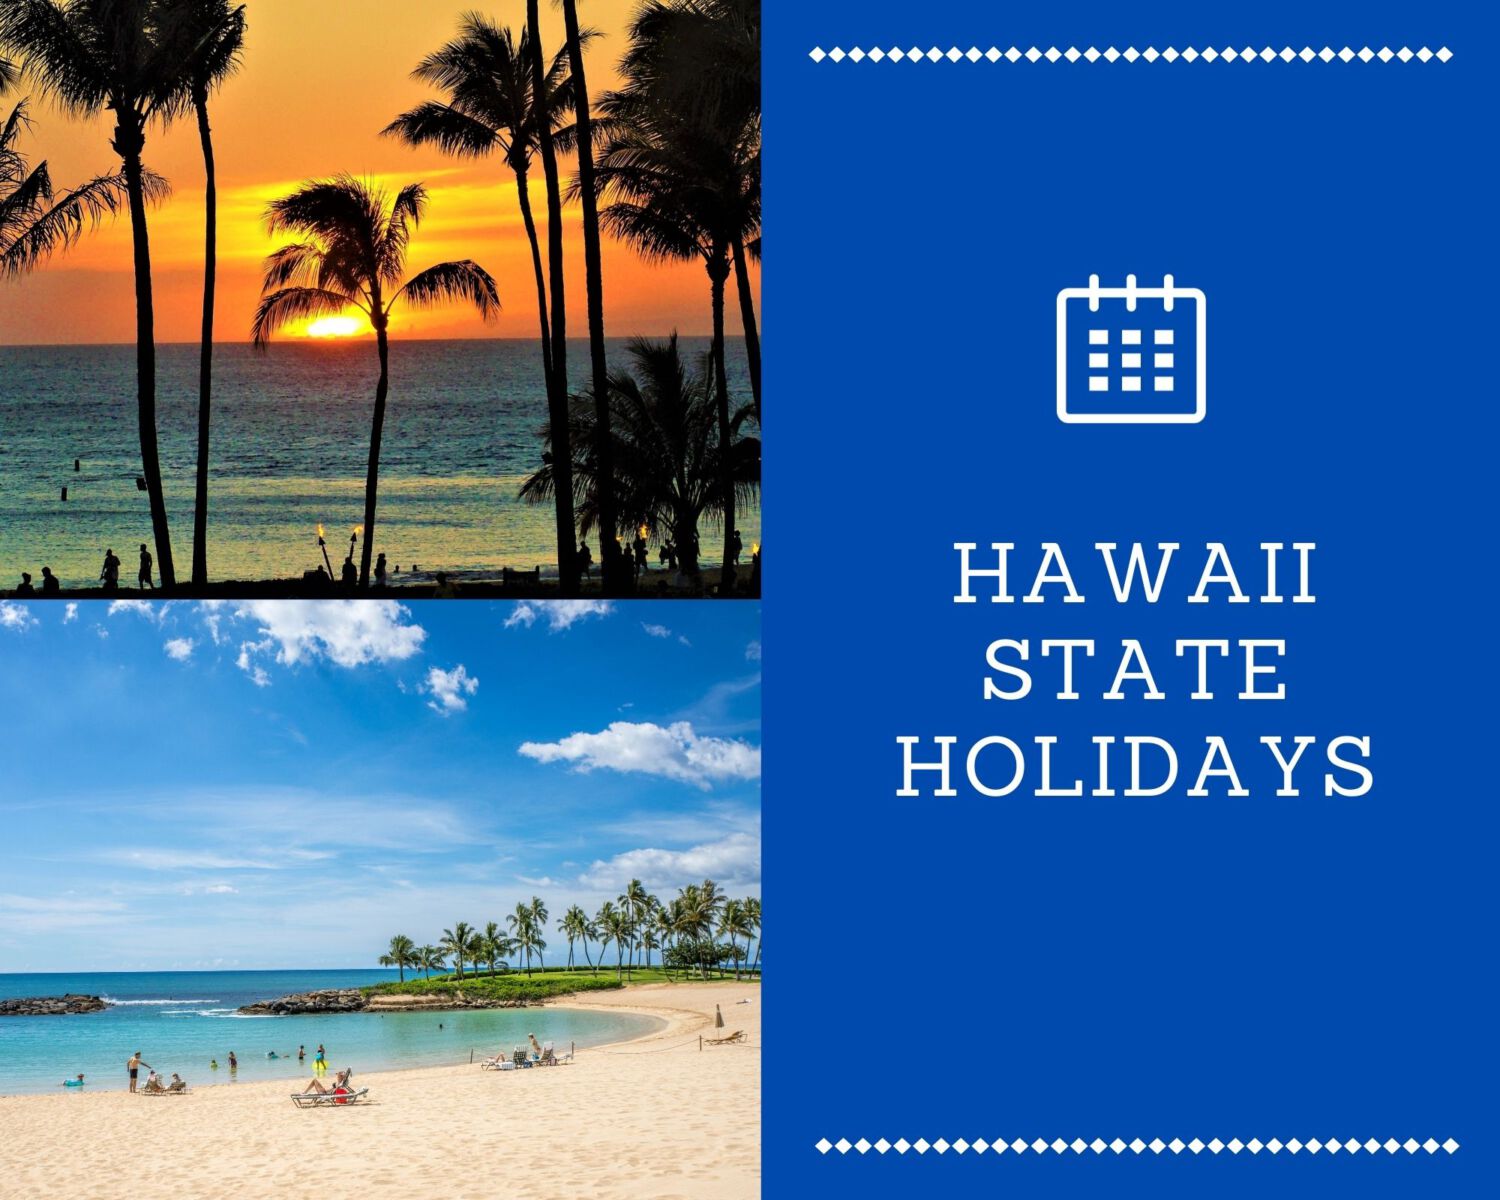 Hawaii (HI) State Holidays [year]